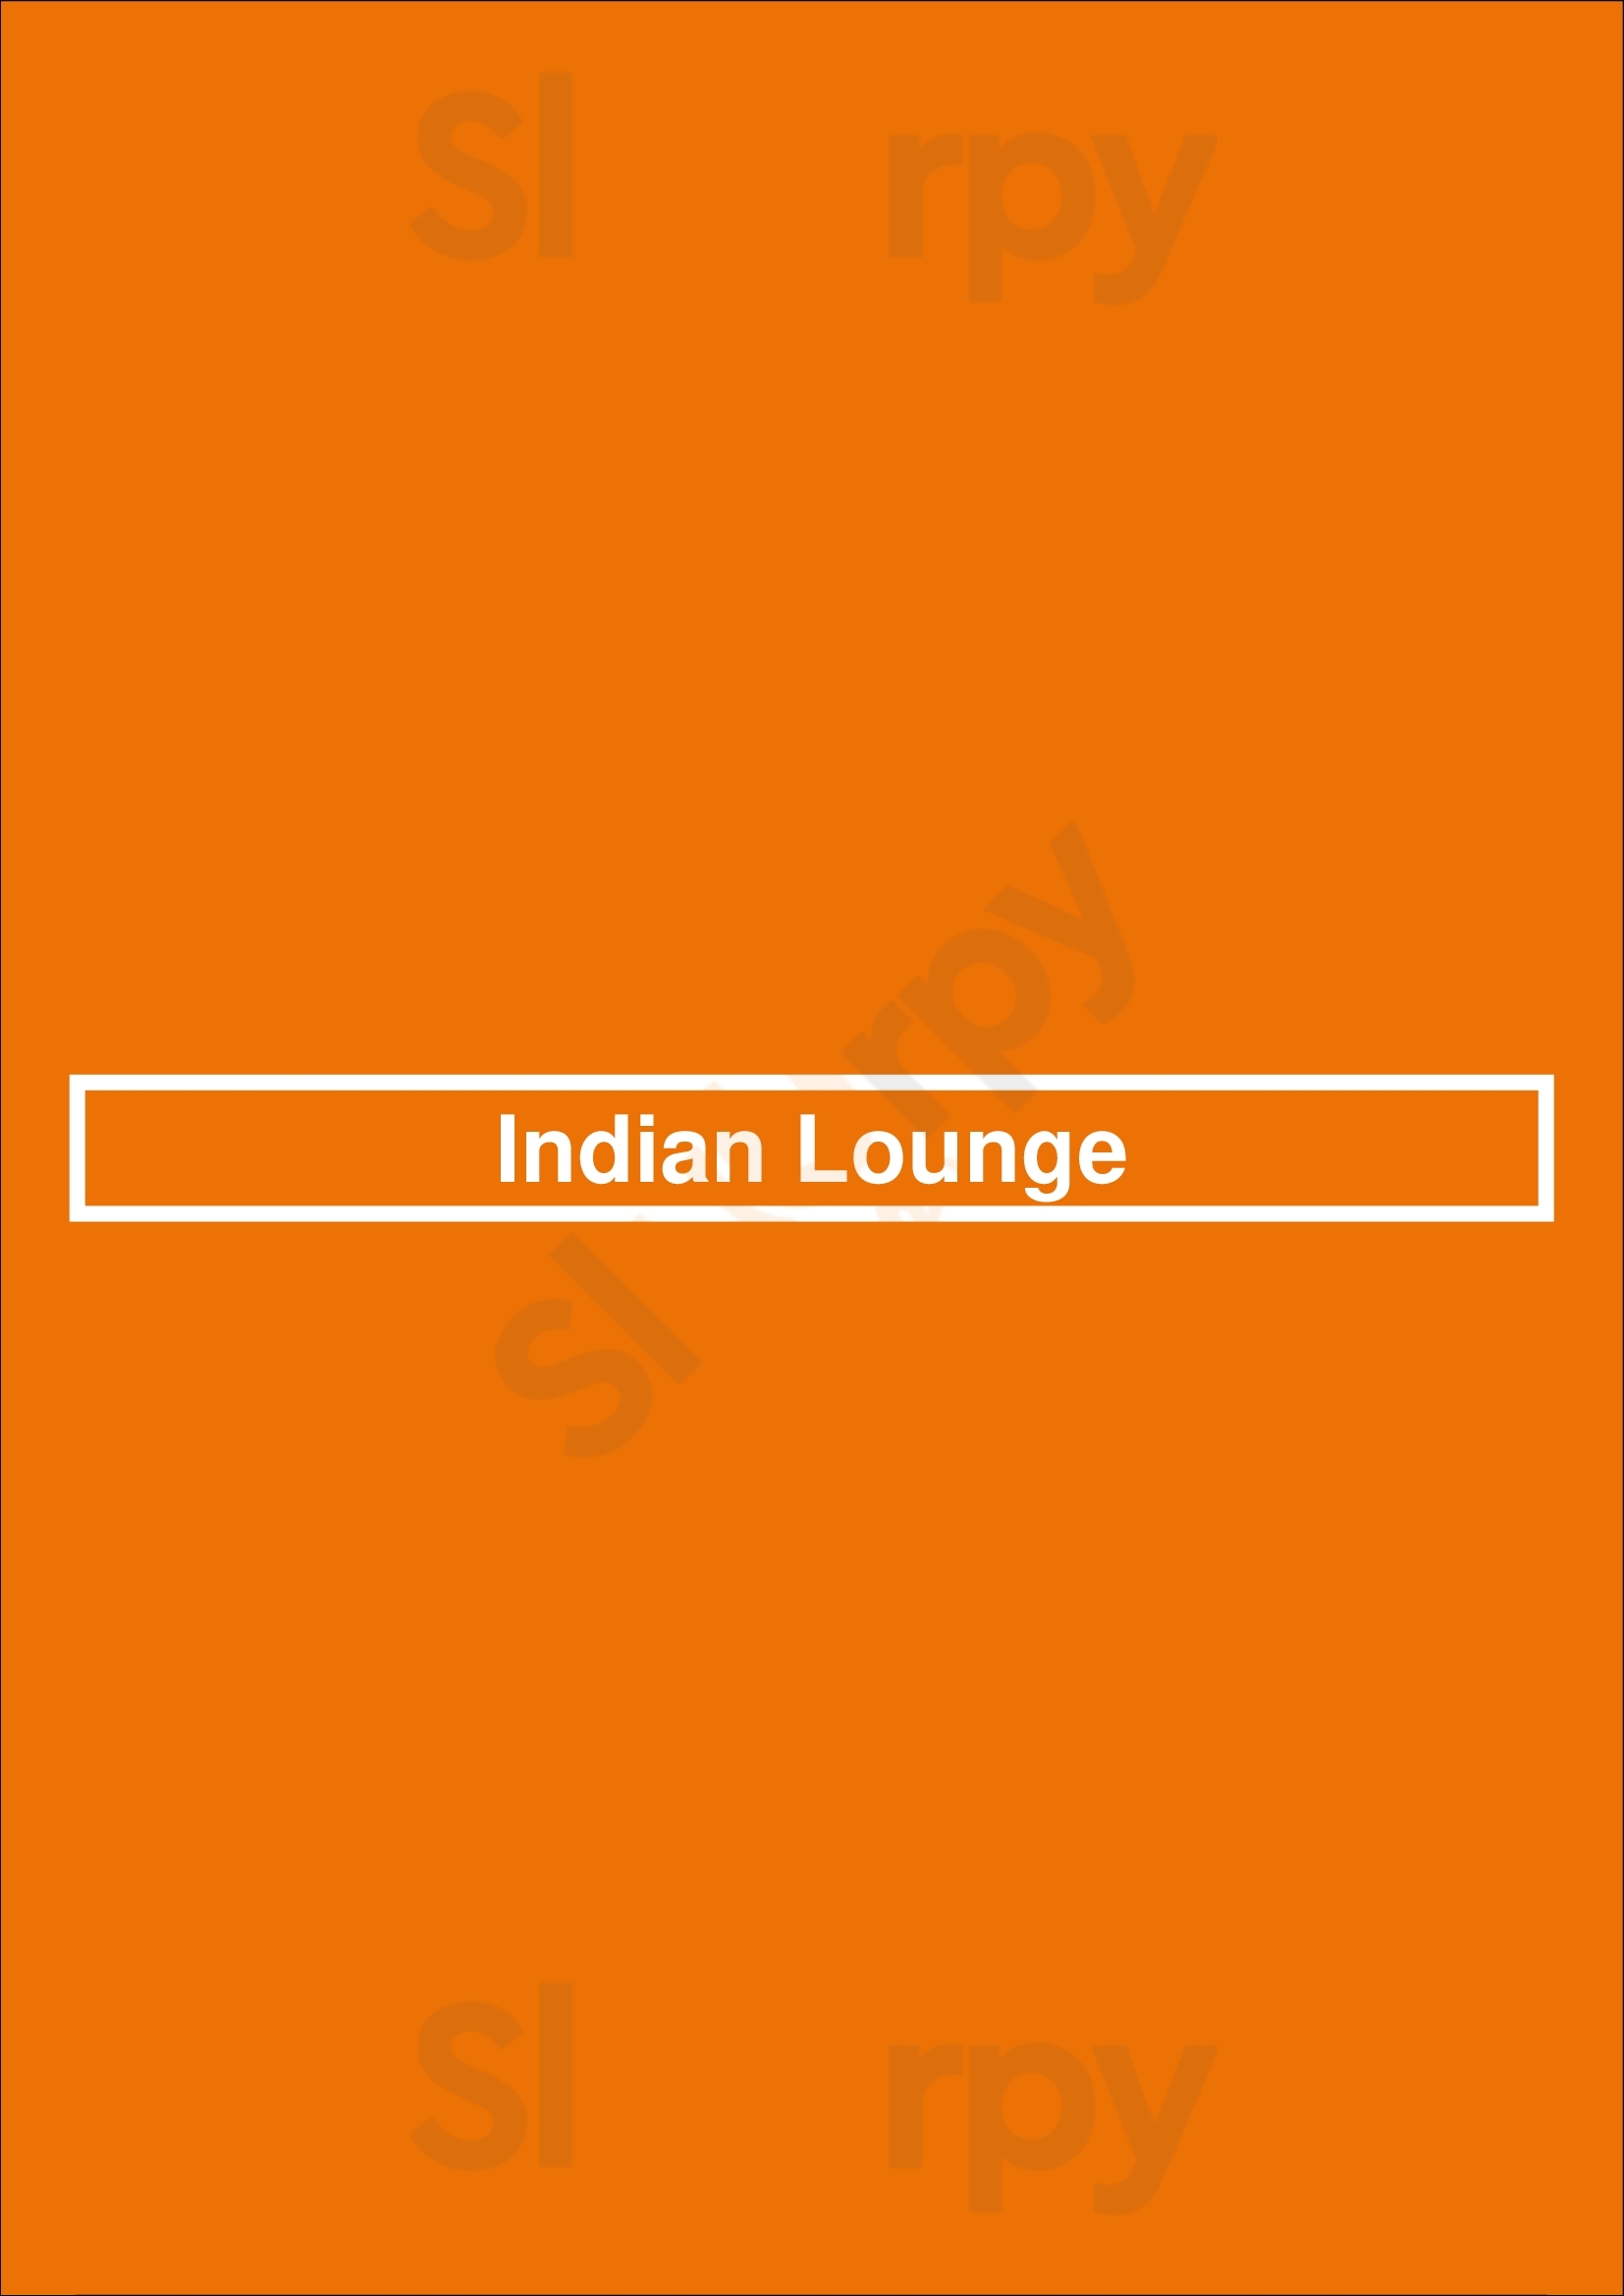 Indian Lounge Hastings Menu - 1